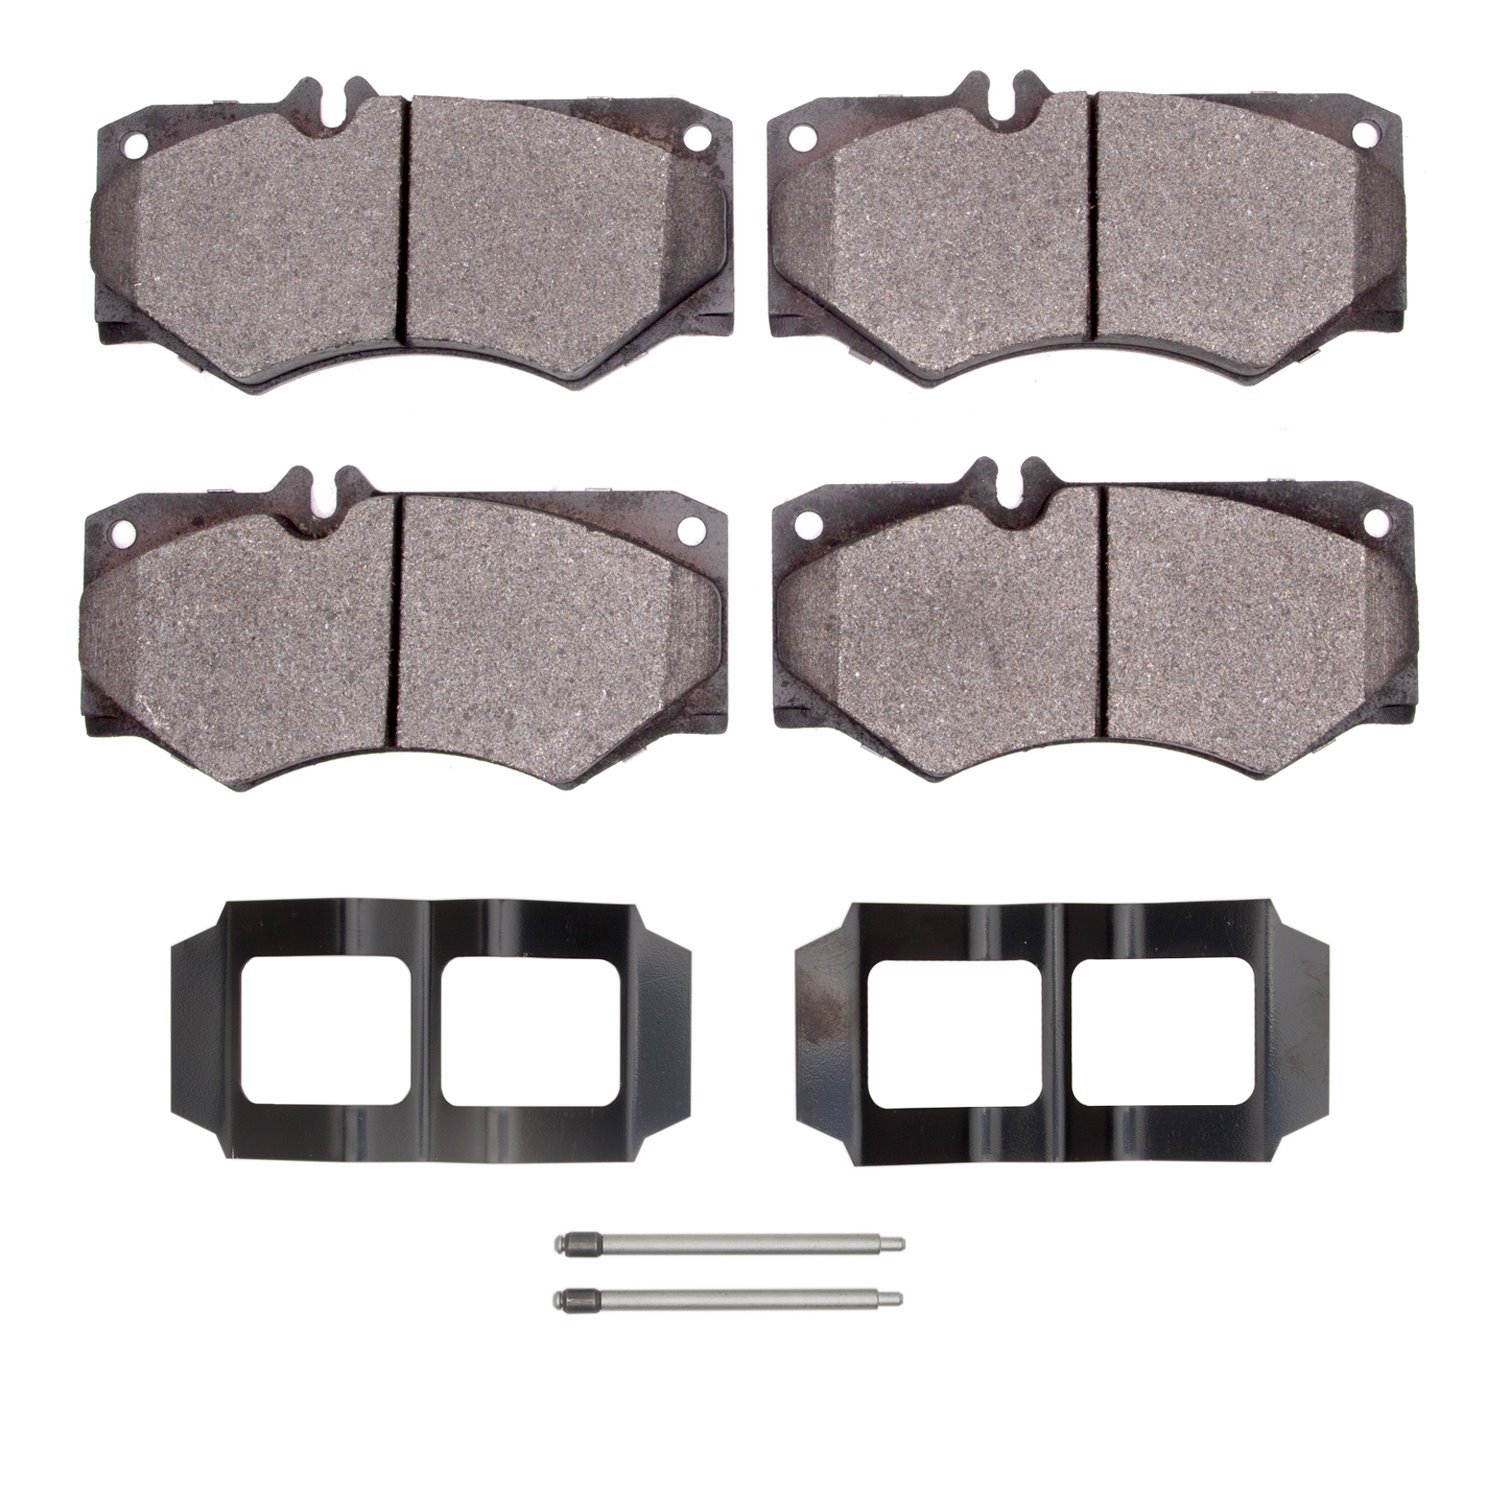 1551-0927-01 5000 Advanced Low-Metallic Brake Pads & Hardware Kit, 2002-2018 Mercedes-Benz, Position: Front